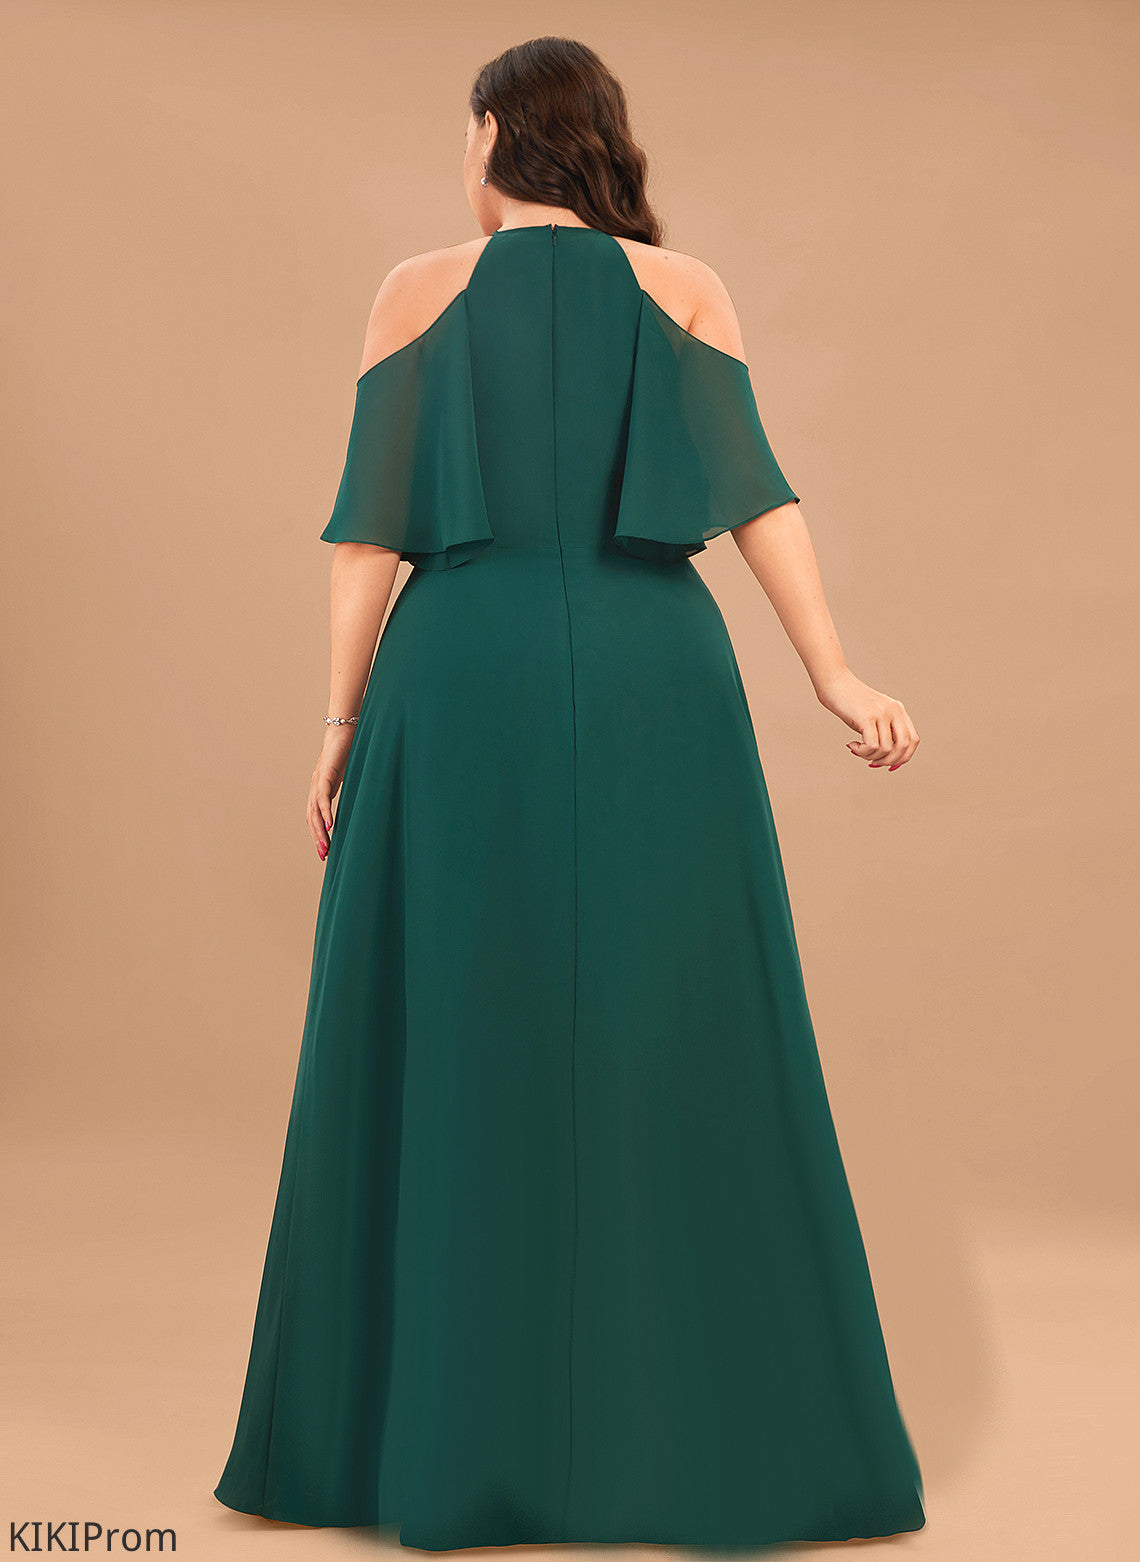 Neckline Fabric A-Line ColdShoulder Length Silhouette Straps&Sleeves Scoop Floor-Length Dylan Bridesmaid Dresses